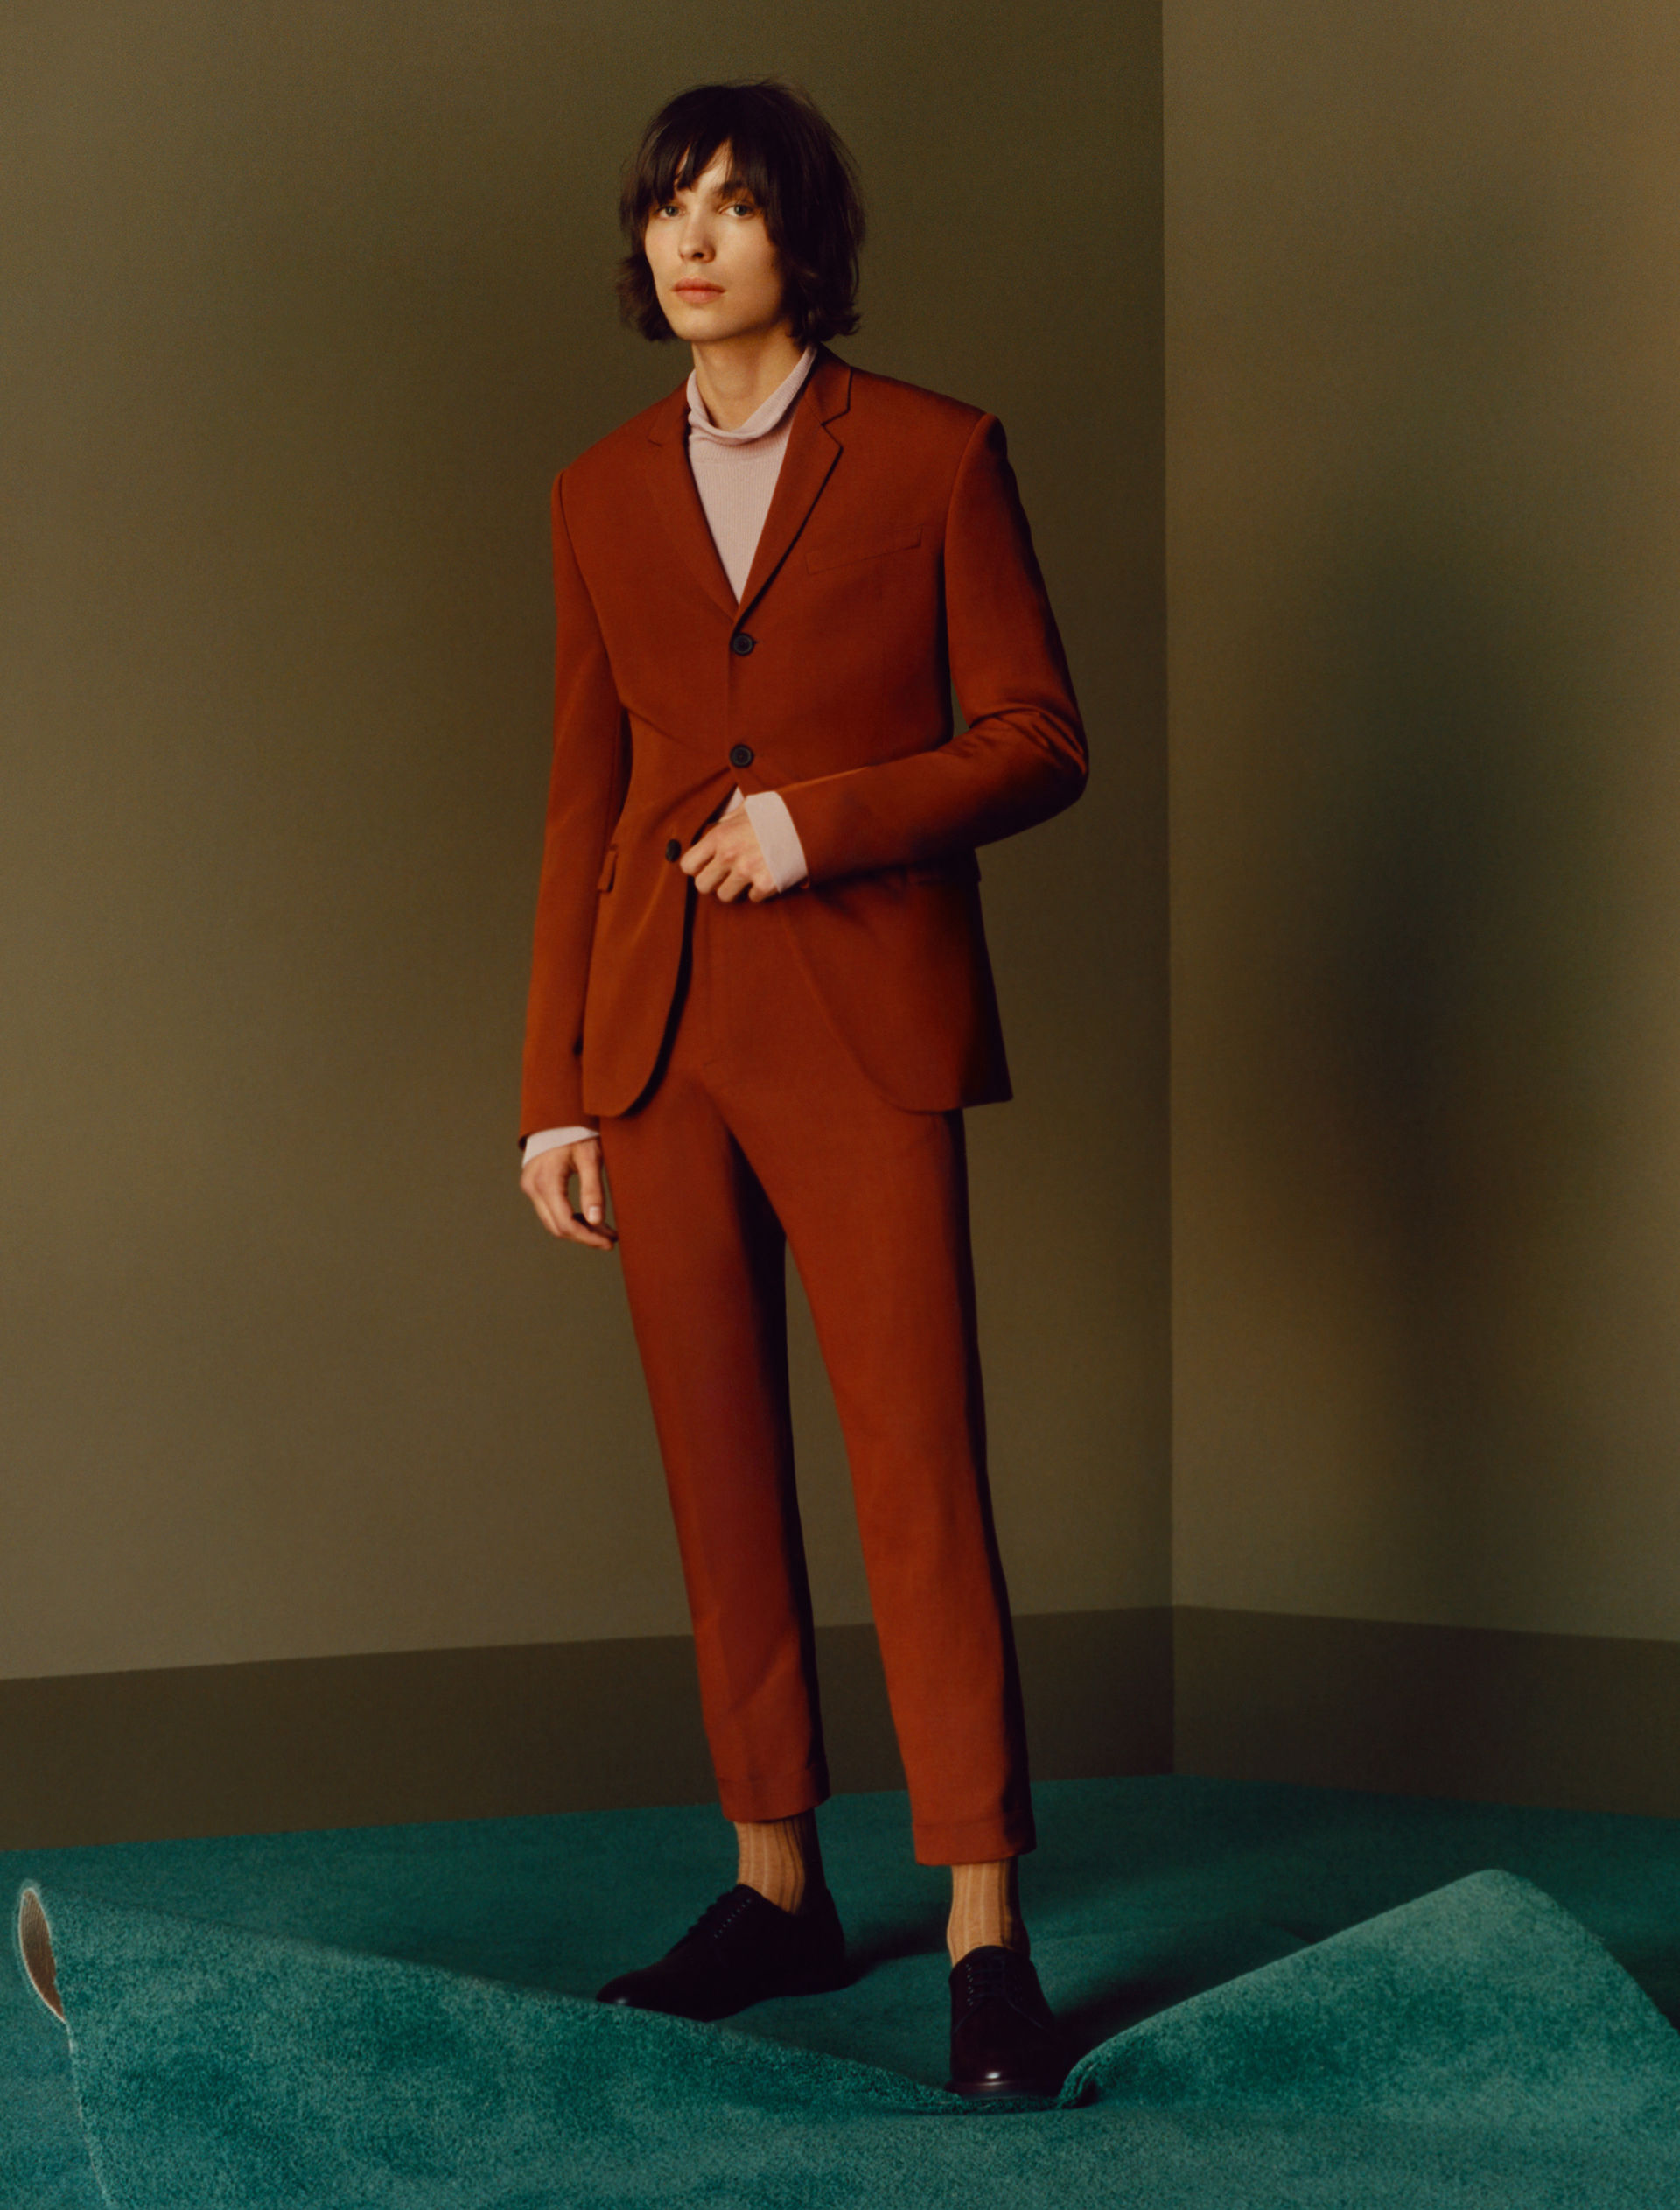 Zara Men Fall Winter 2015 Campaign 006 Zara FallWinter 2015 Menswear ...